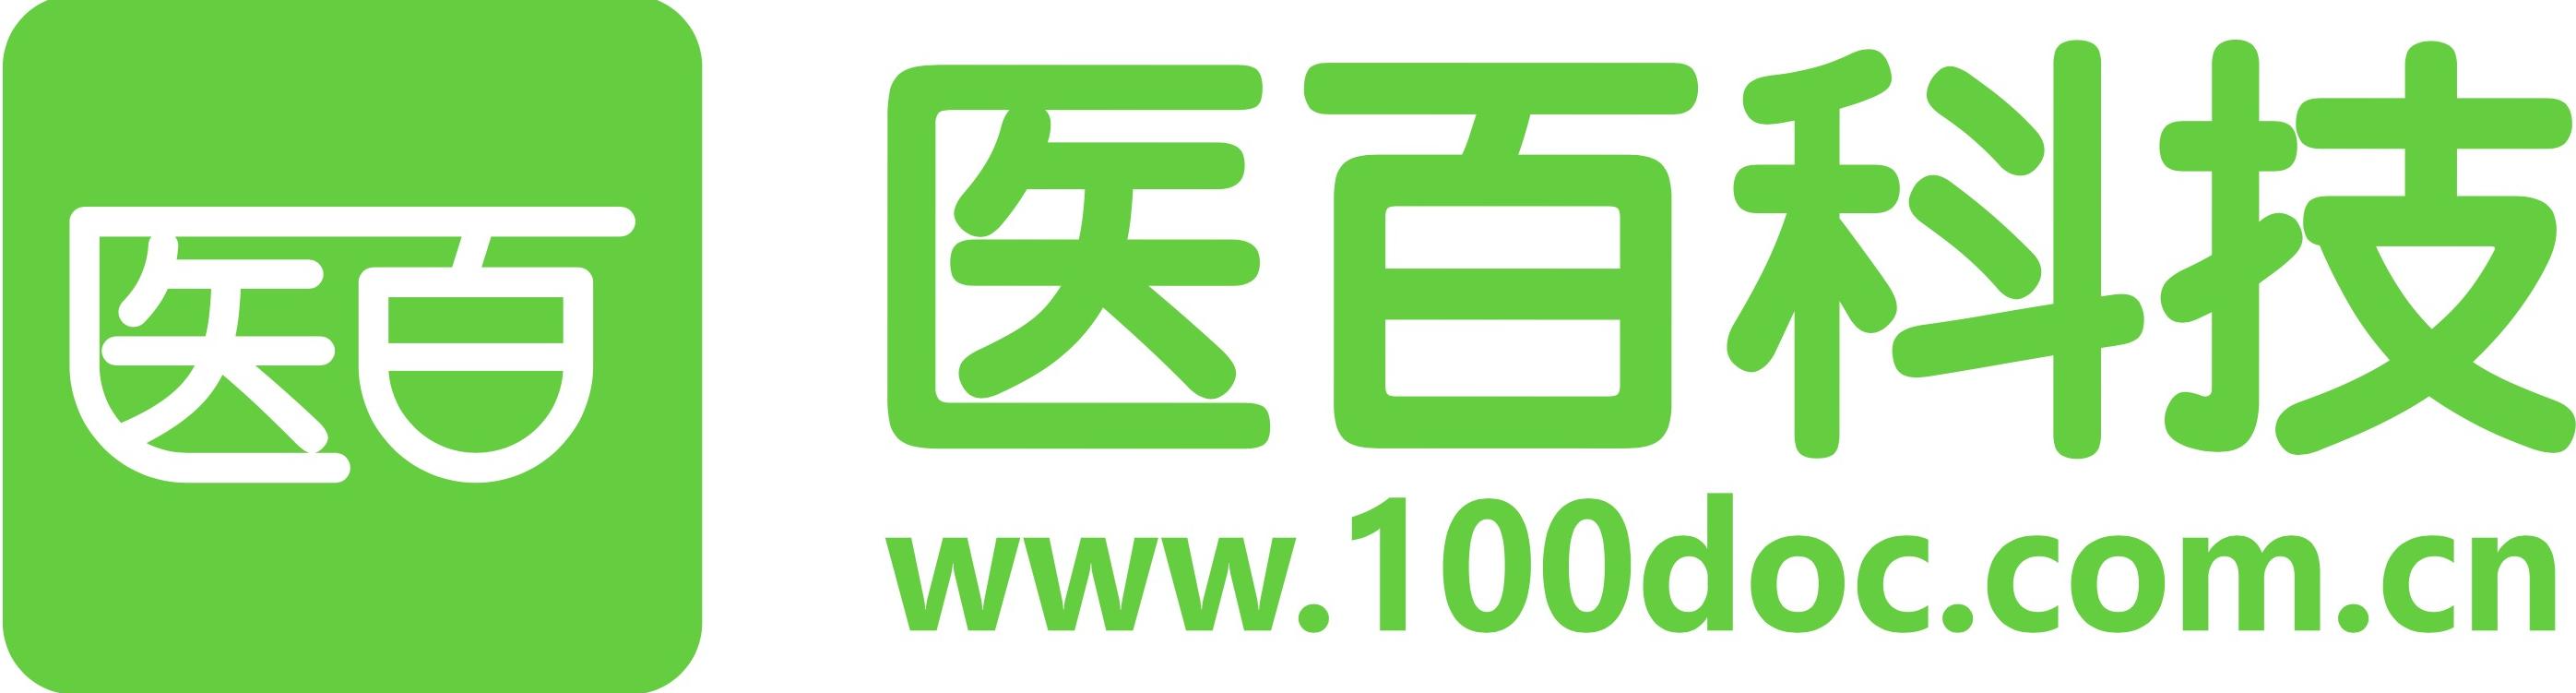 100doc (医百科技)_logo